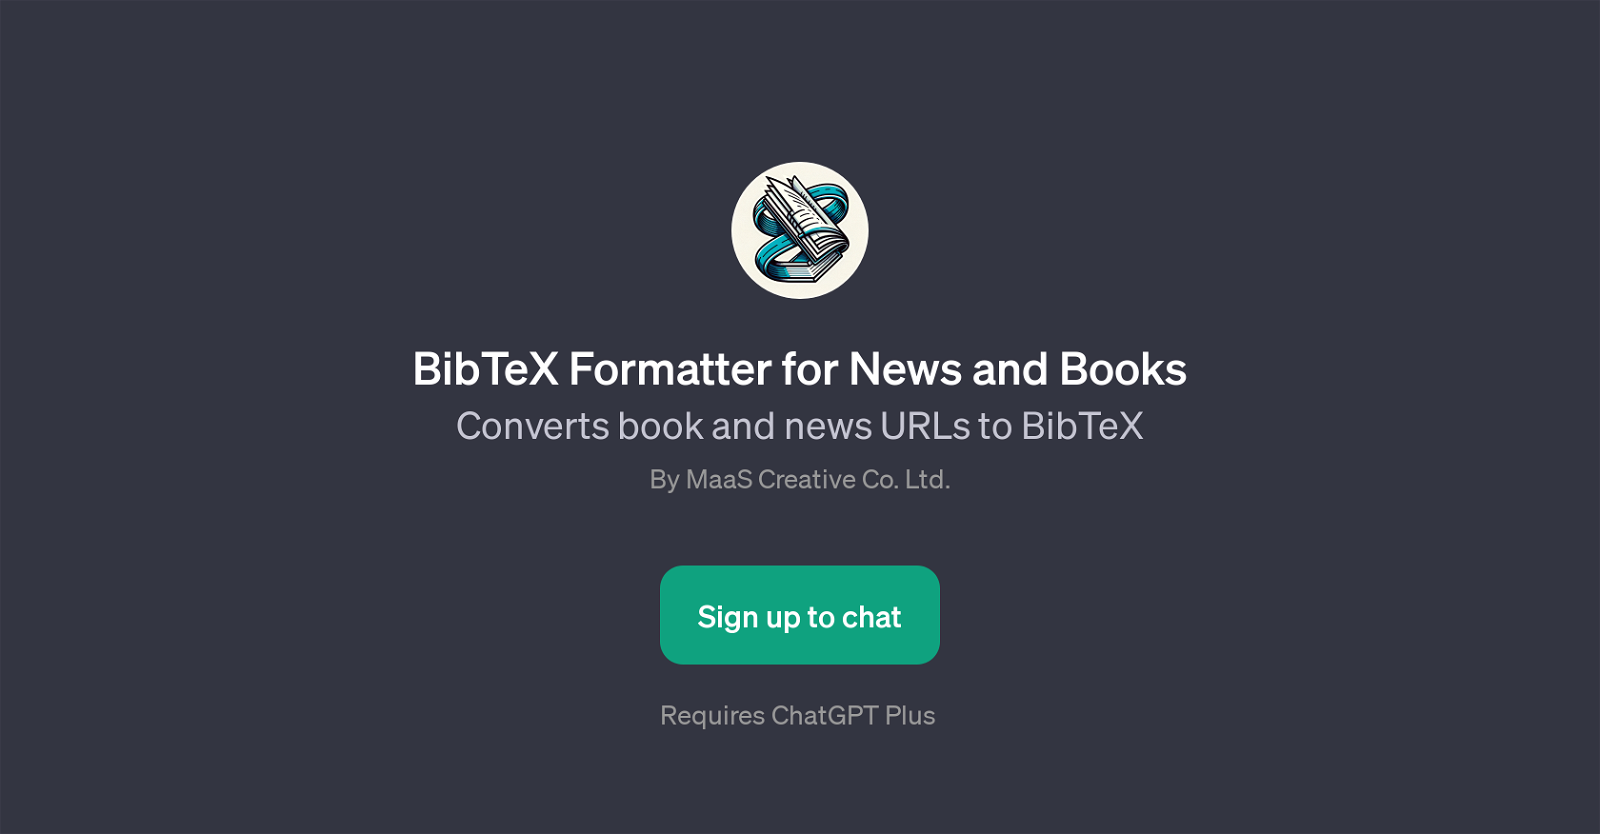 BibTeX Formatter for News and Books website